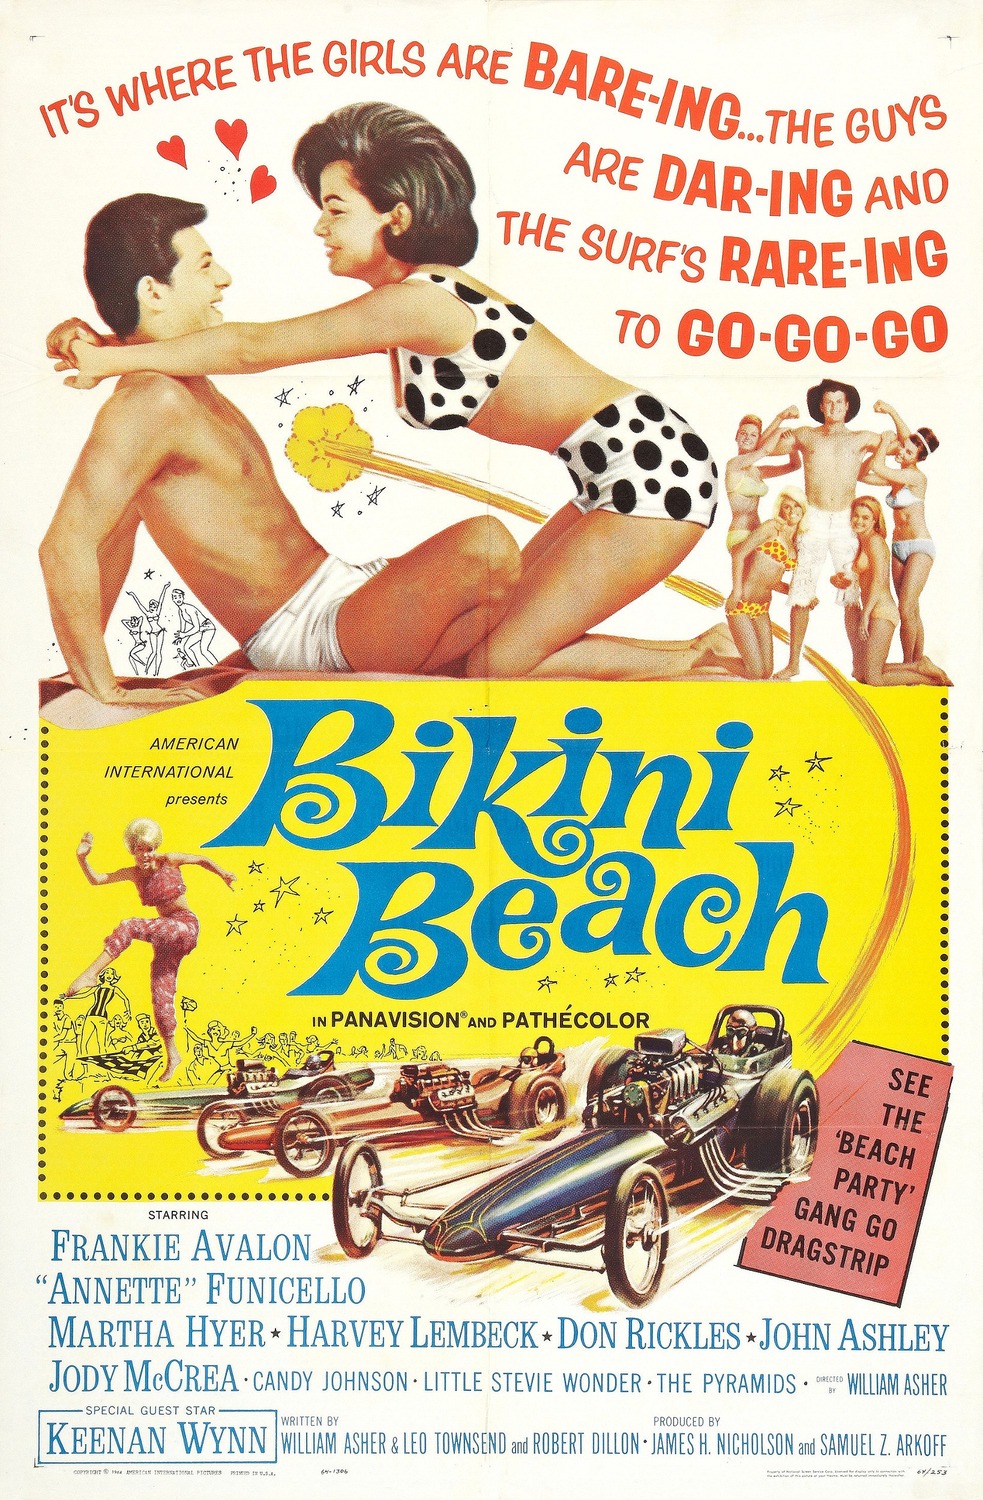 Extra Large Movie Poster Image for Bikini Beach 